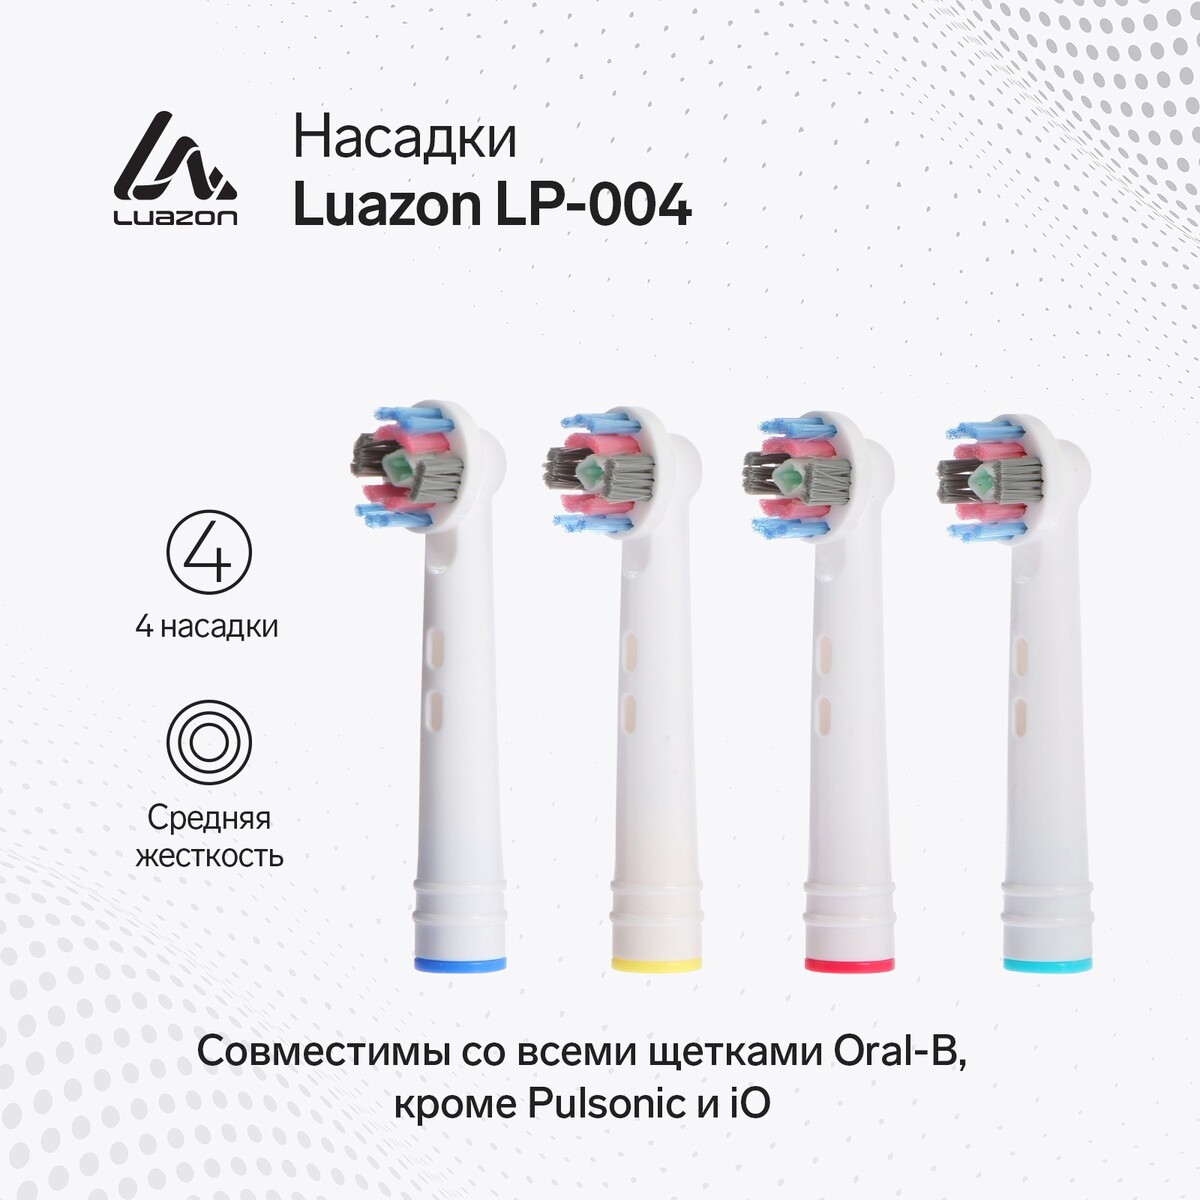  luazon lp-004,     oral b, 4 ,  